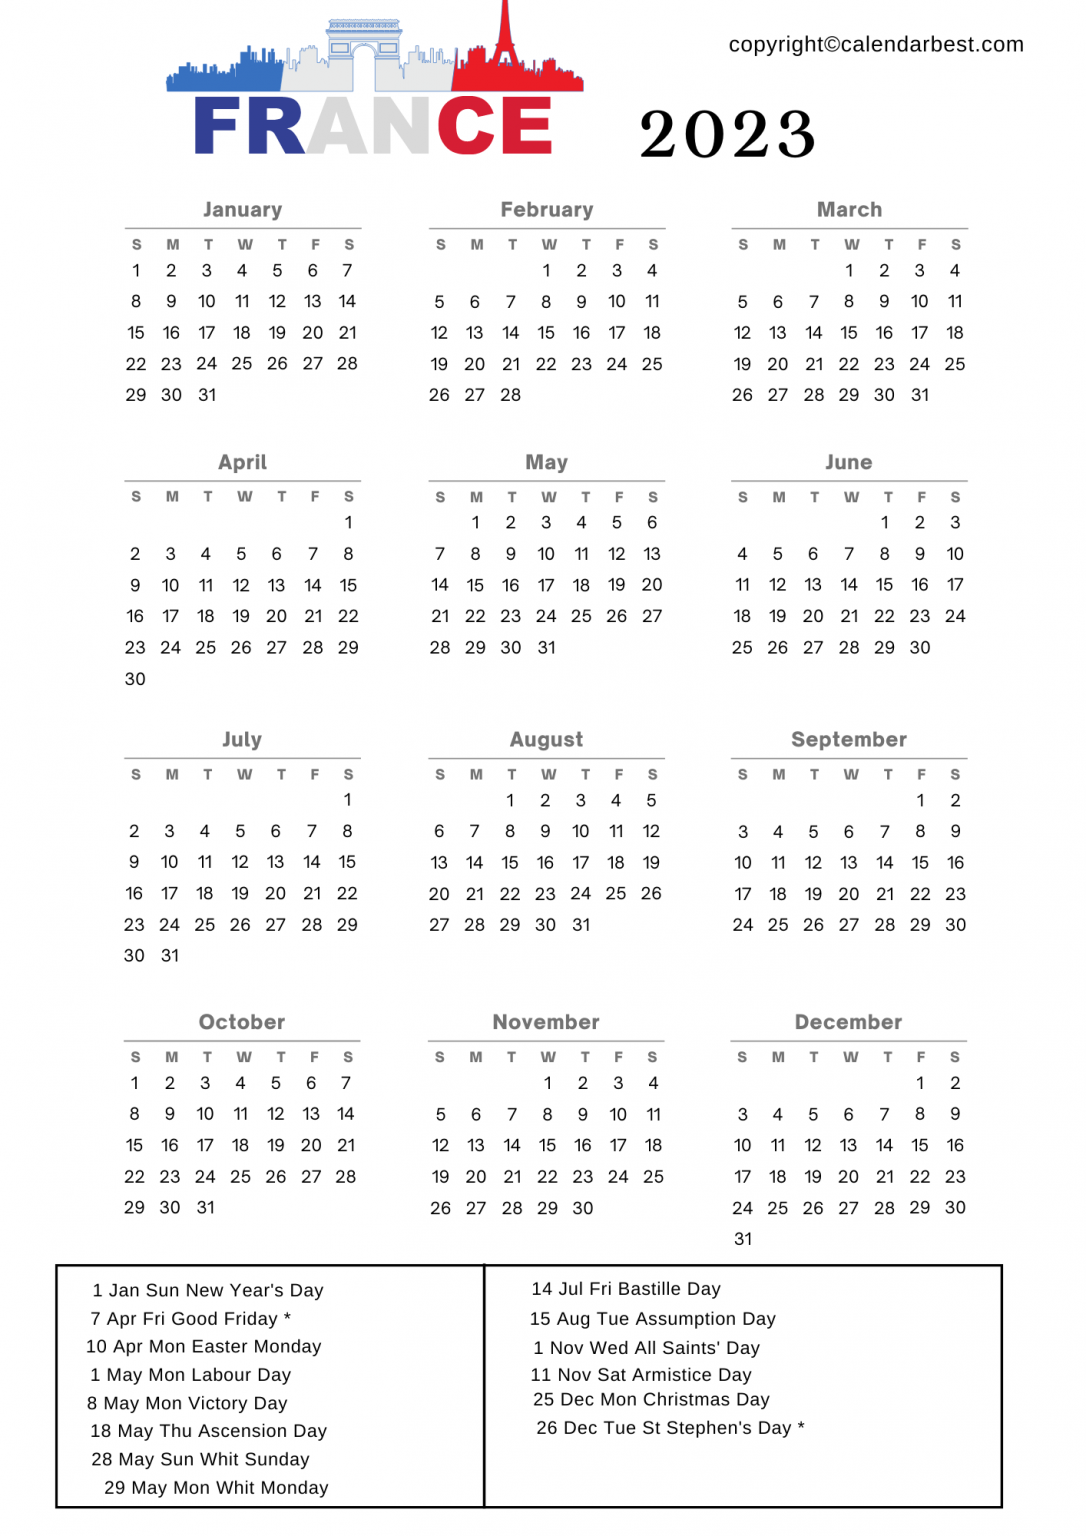 France Calendar 2023 with Holidays | Free Printable Calendar 2023